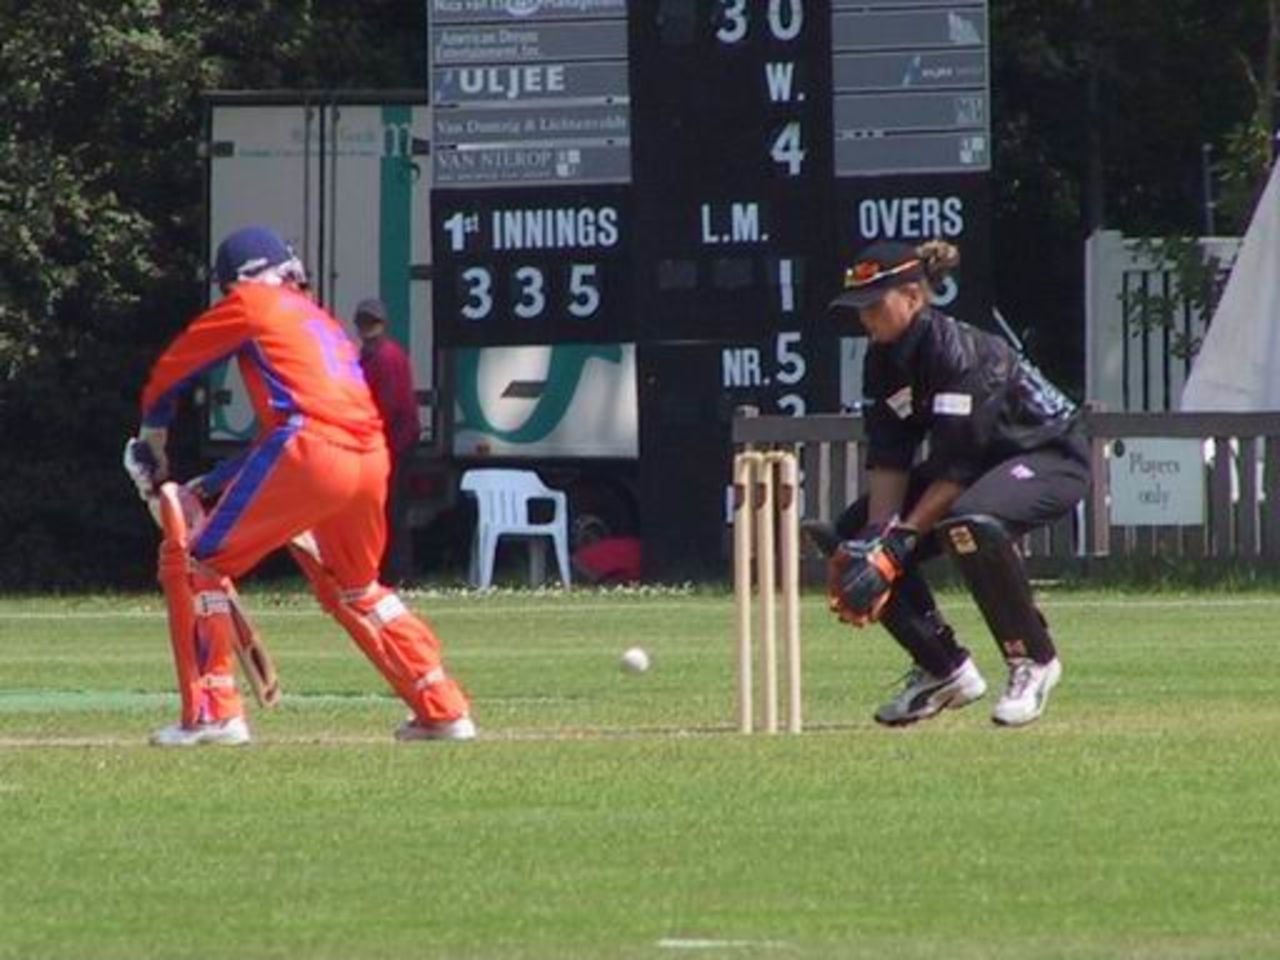 Rolls at the wicket, Rambaldo batting, 26 June 2002